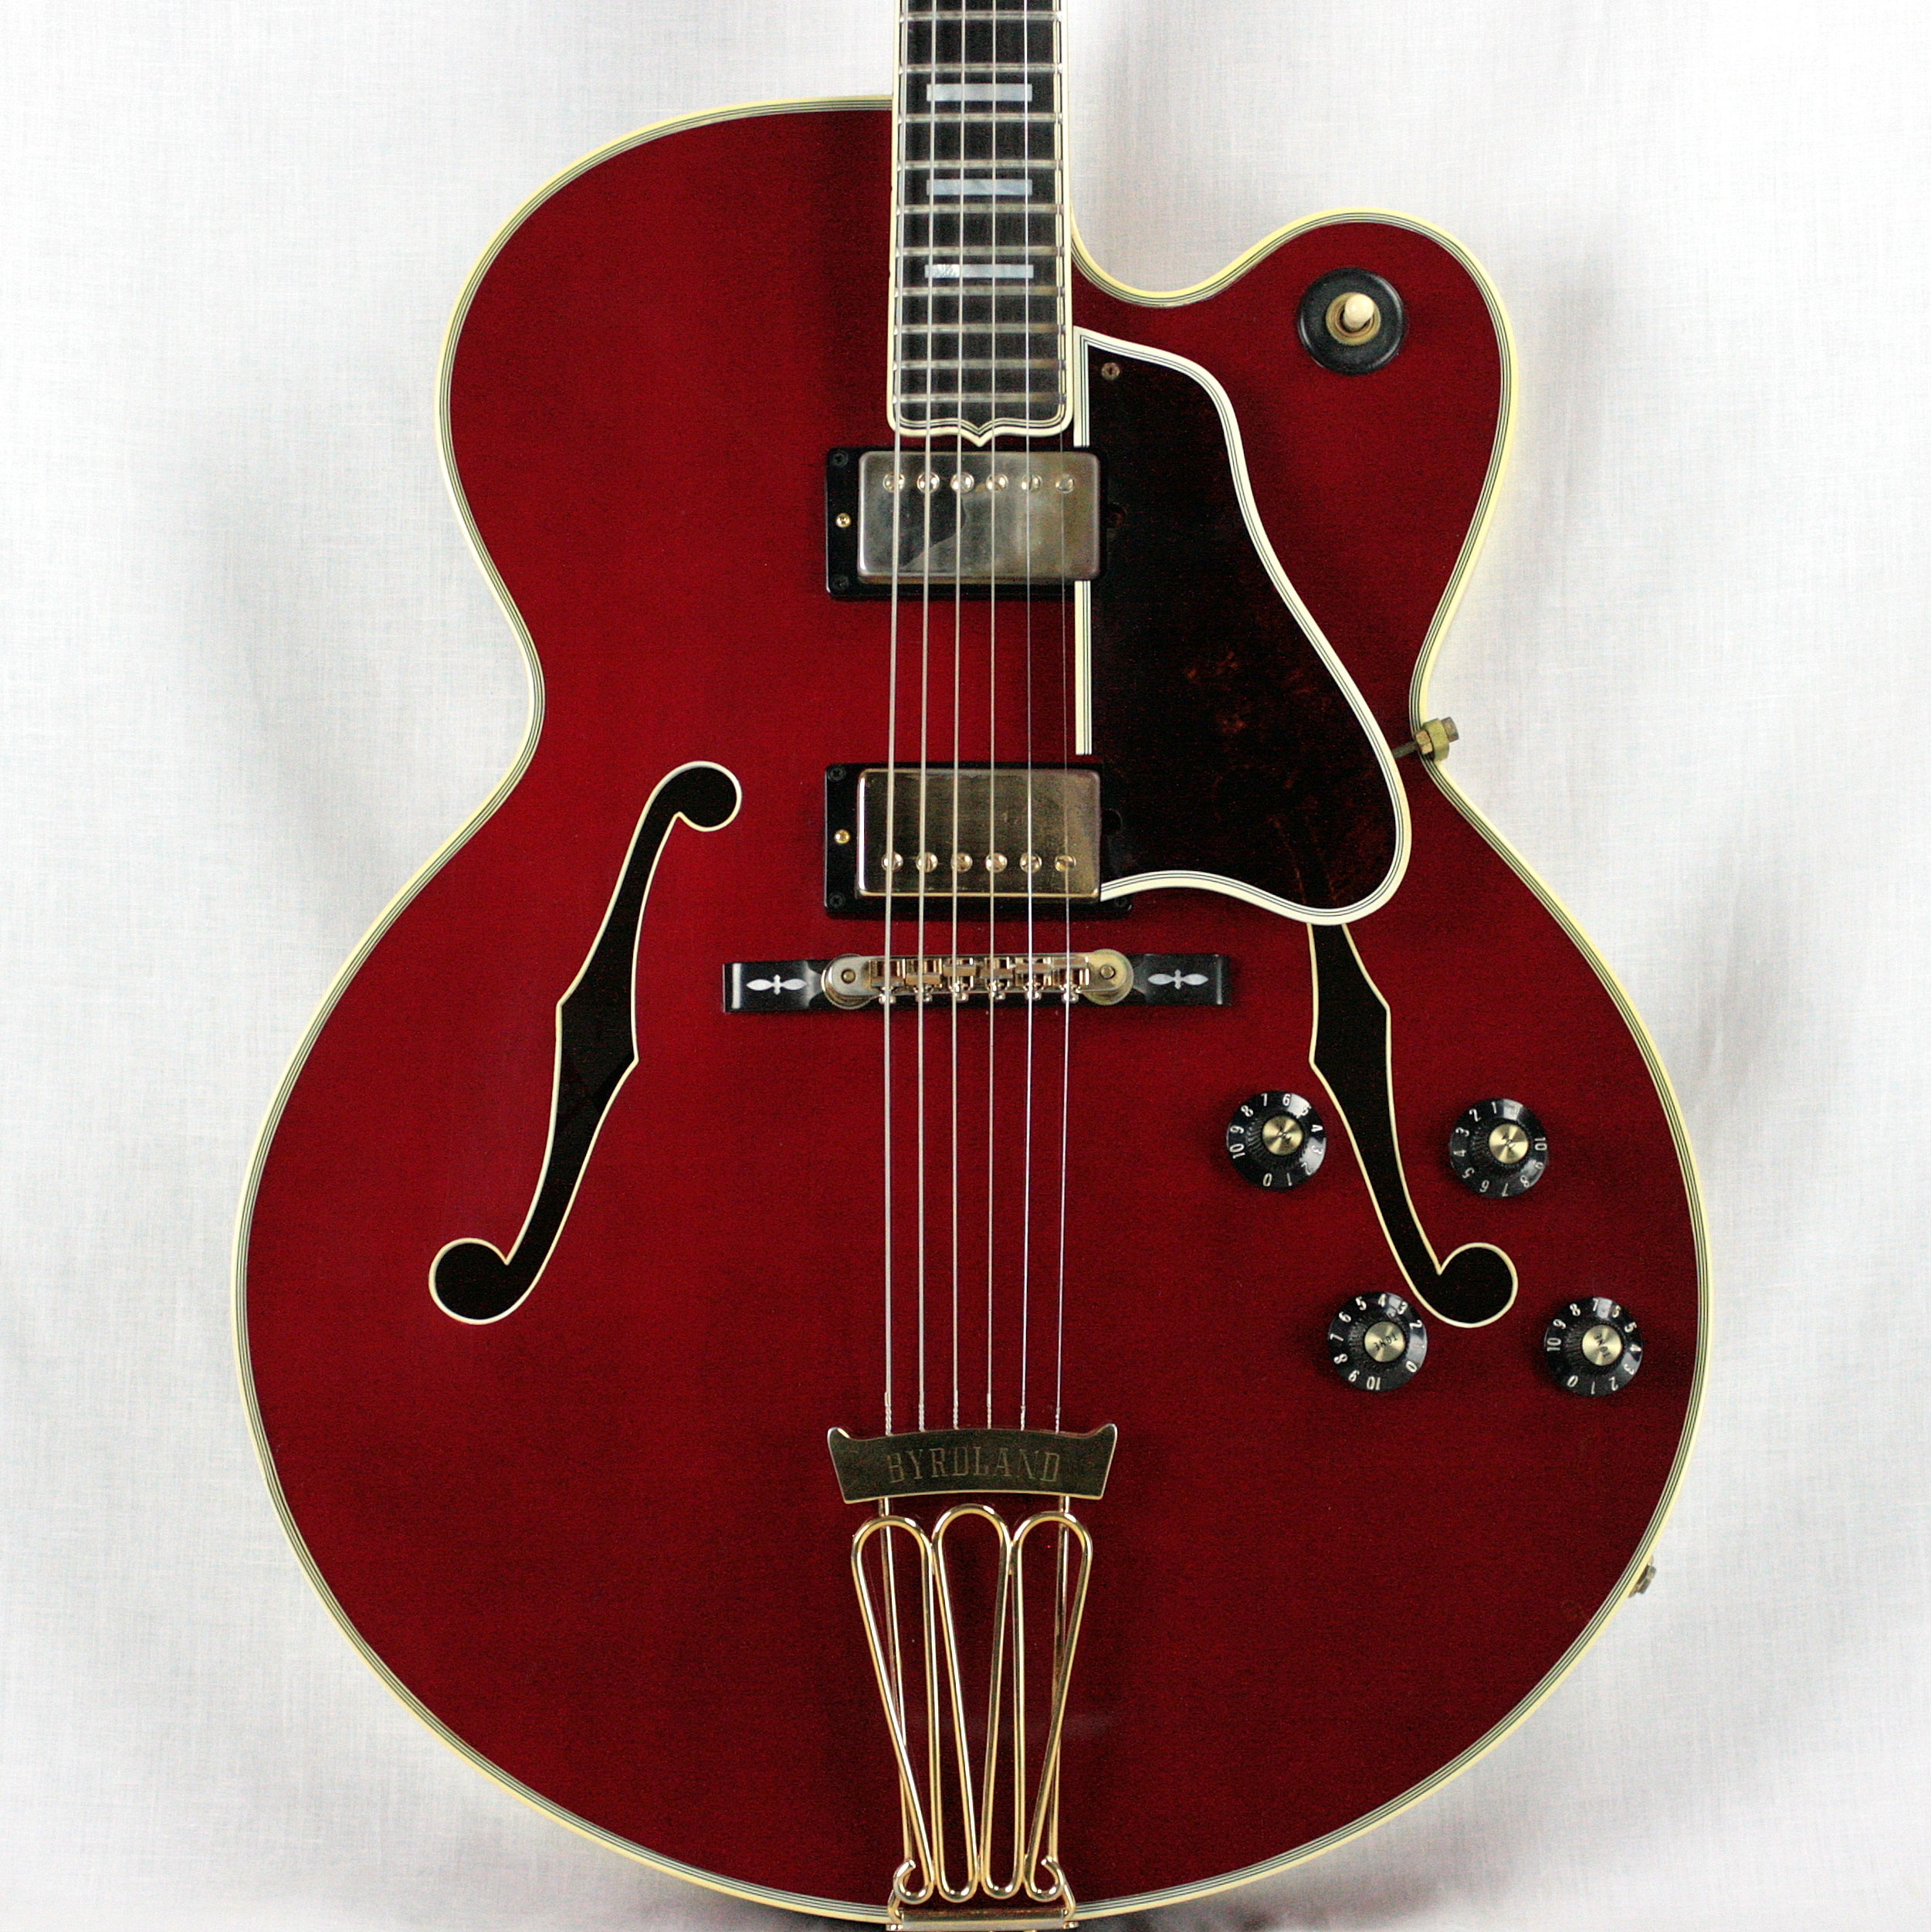 *SOLD*  INCREDIBLY RARE 1980 Gibson Byrdland w/ F5 Mandolin Headstock! CHERRY RED! es335 one off